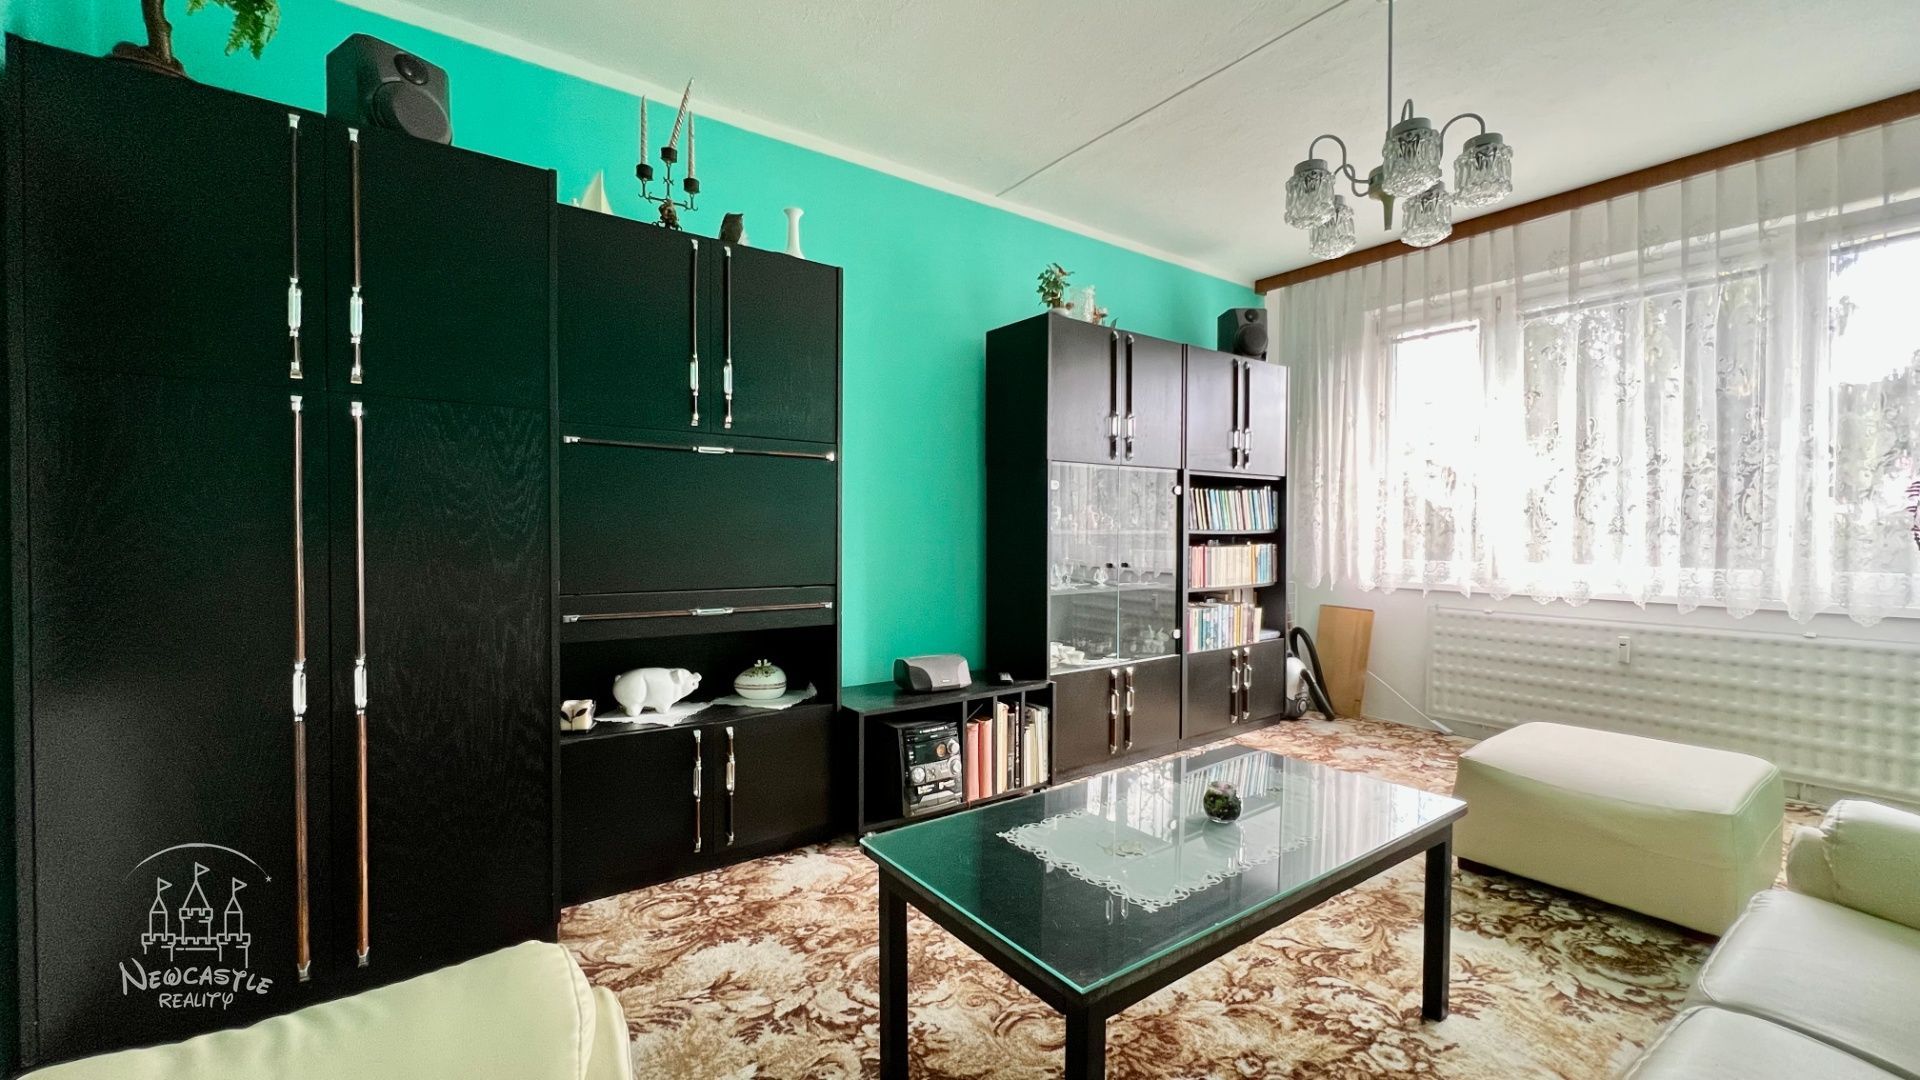 NEWCASTLE⏐3 izb. bytu s balkónom na ul. Karpatská, voľný od 1.10.2022